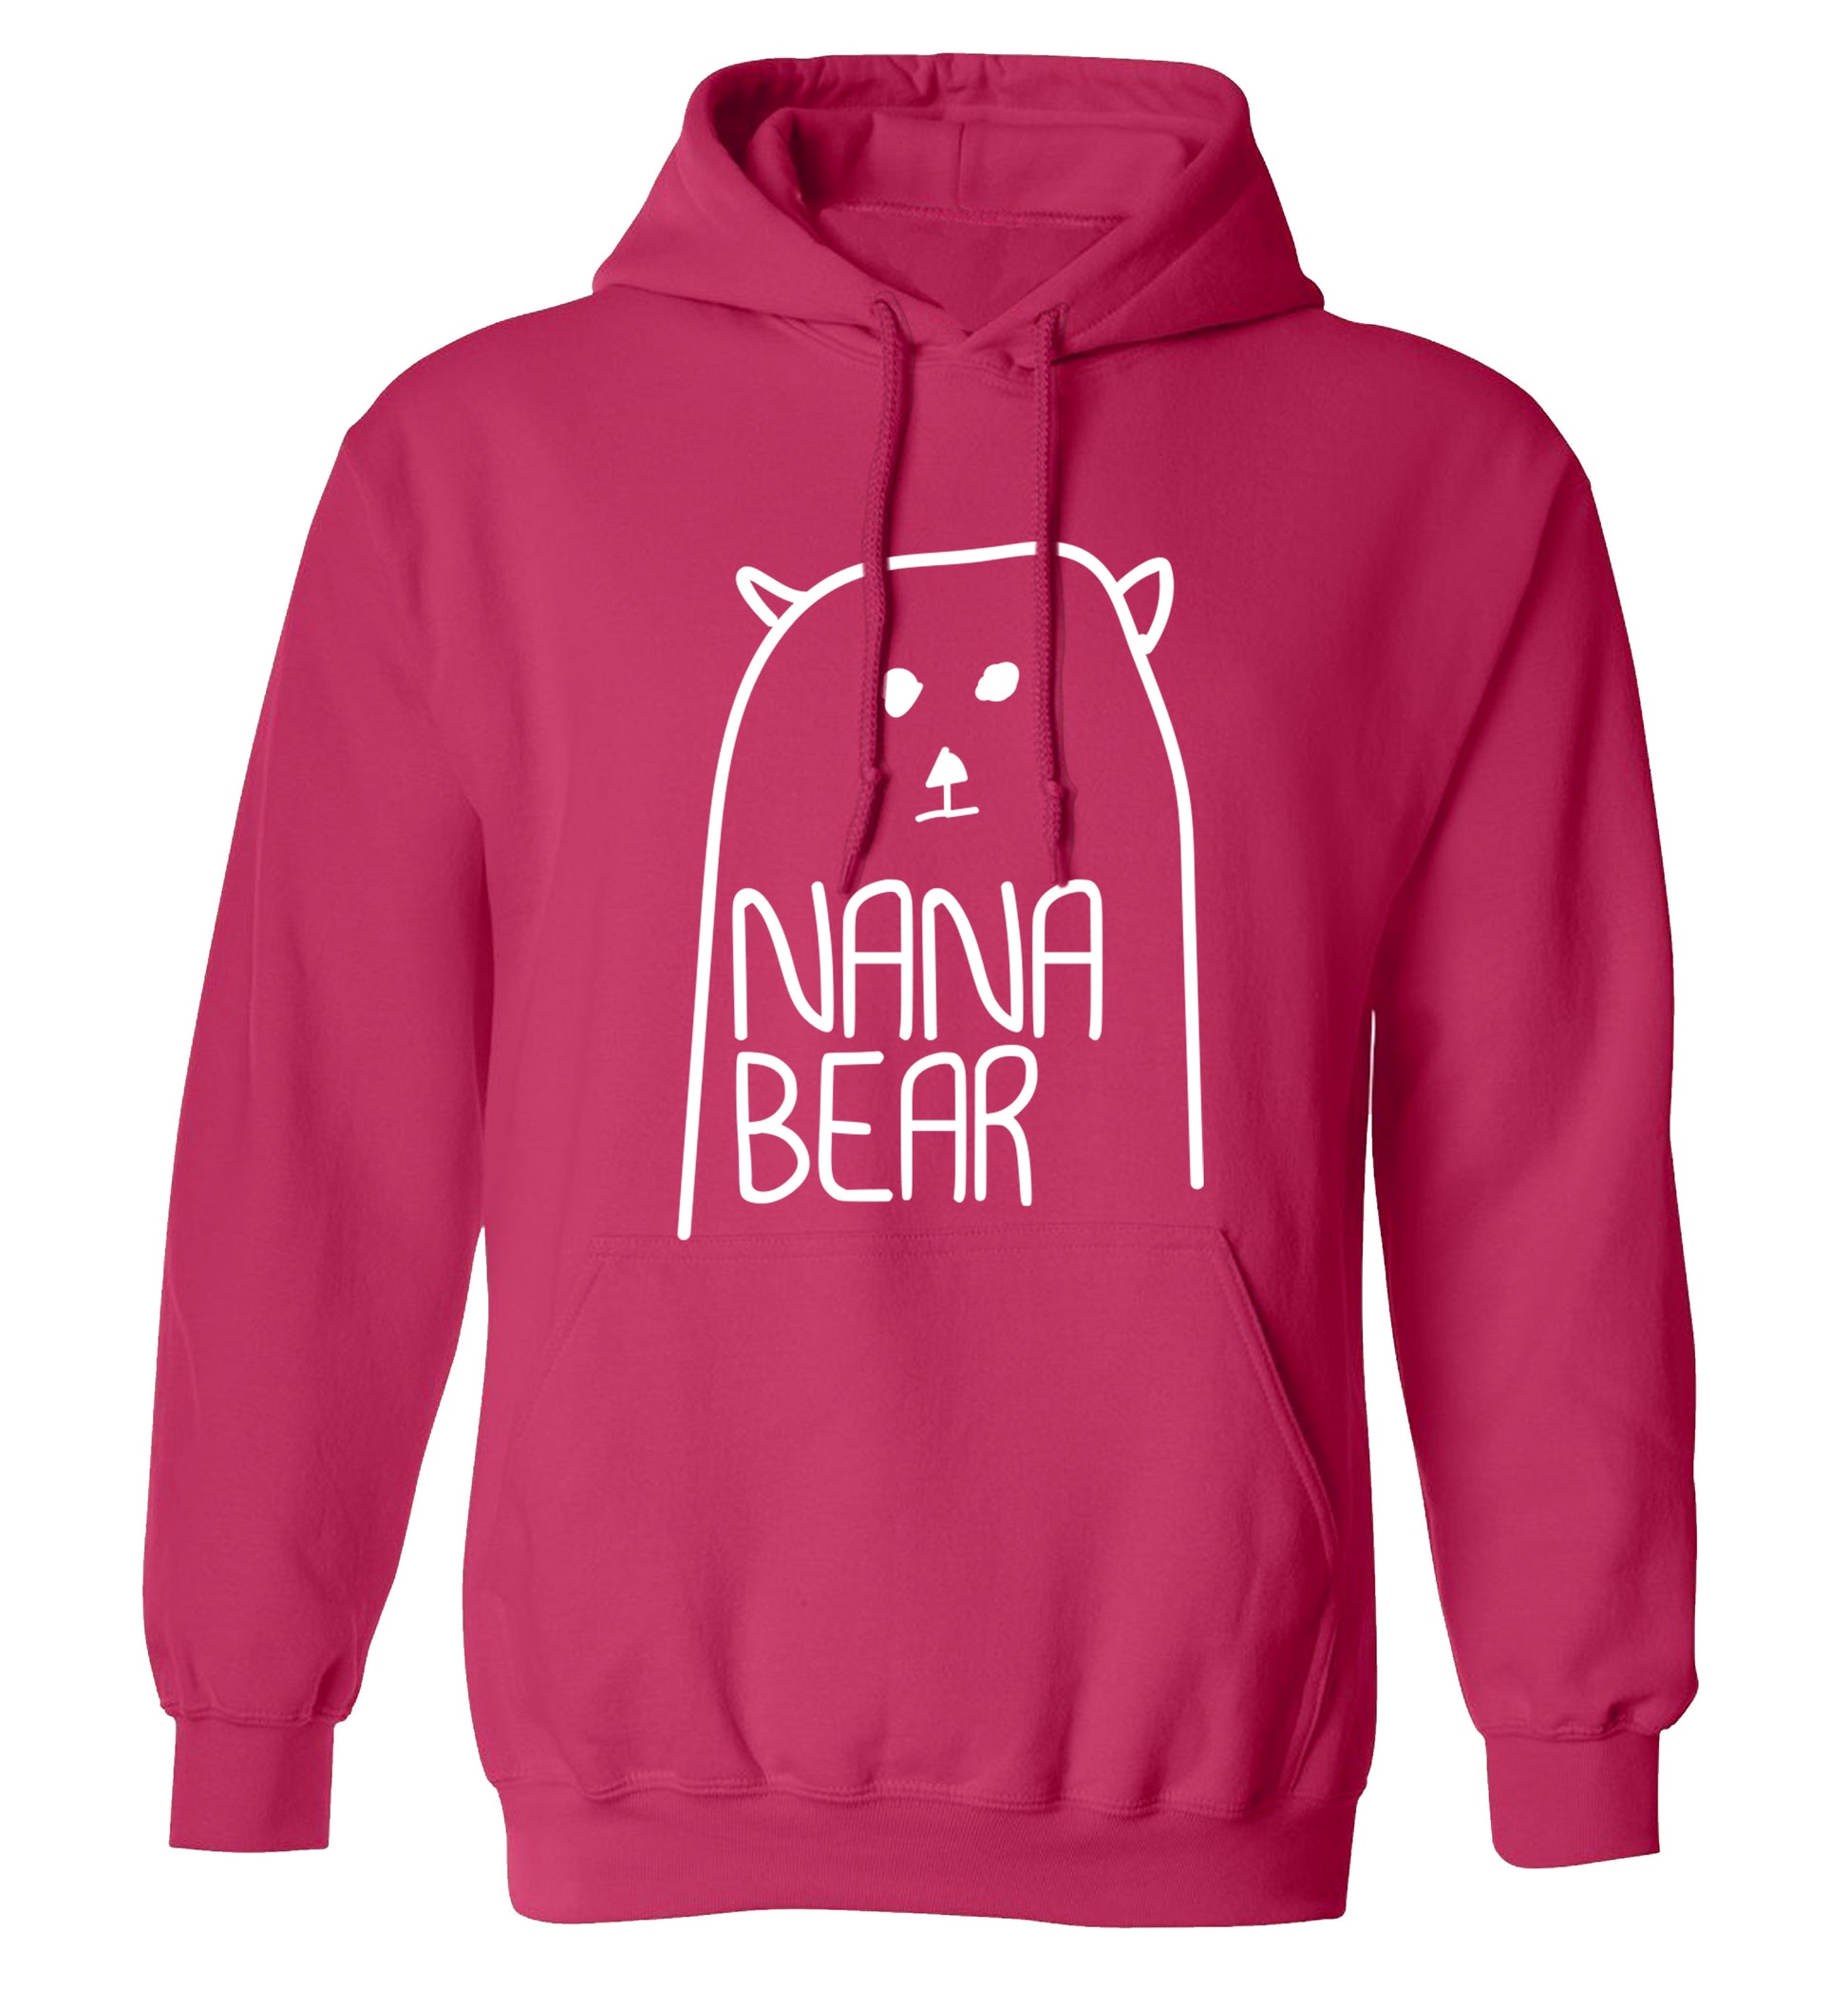 Nana bear adults unisex pink hoodie 2XL